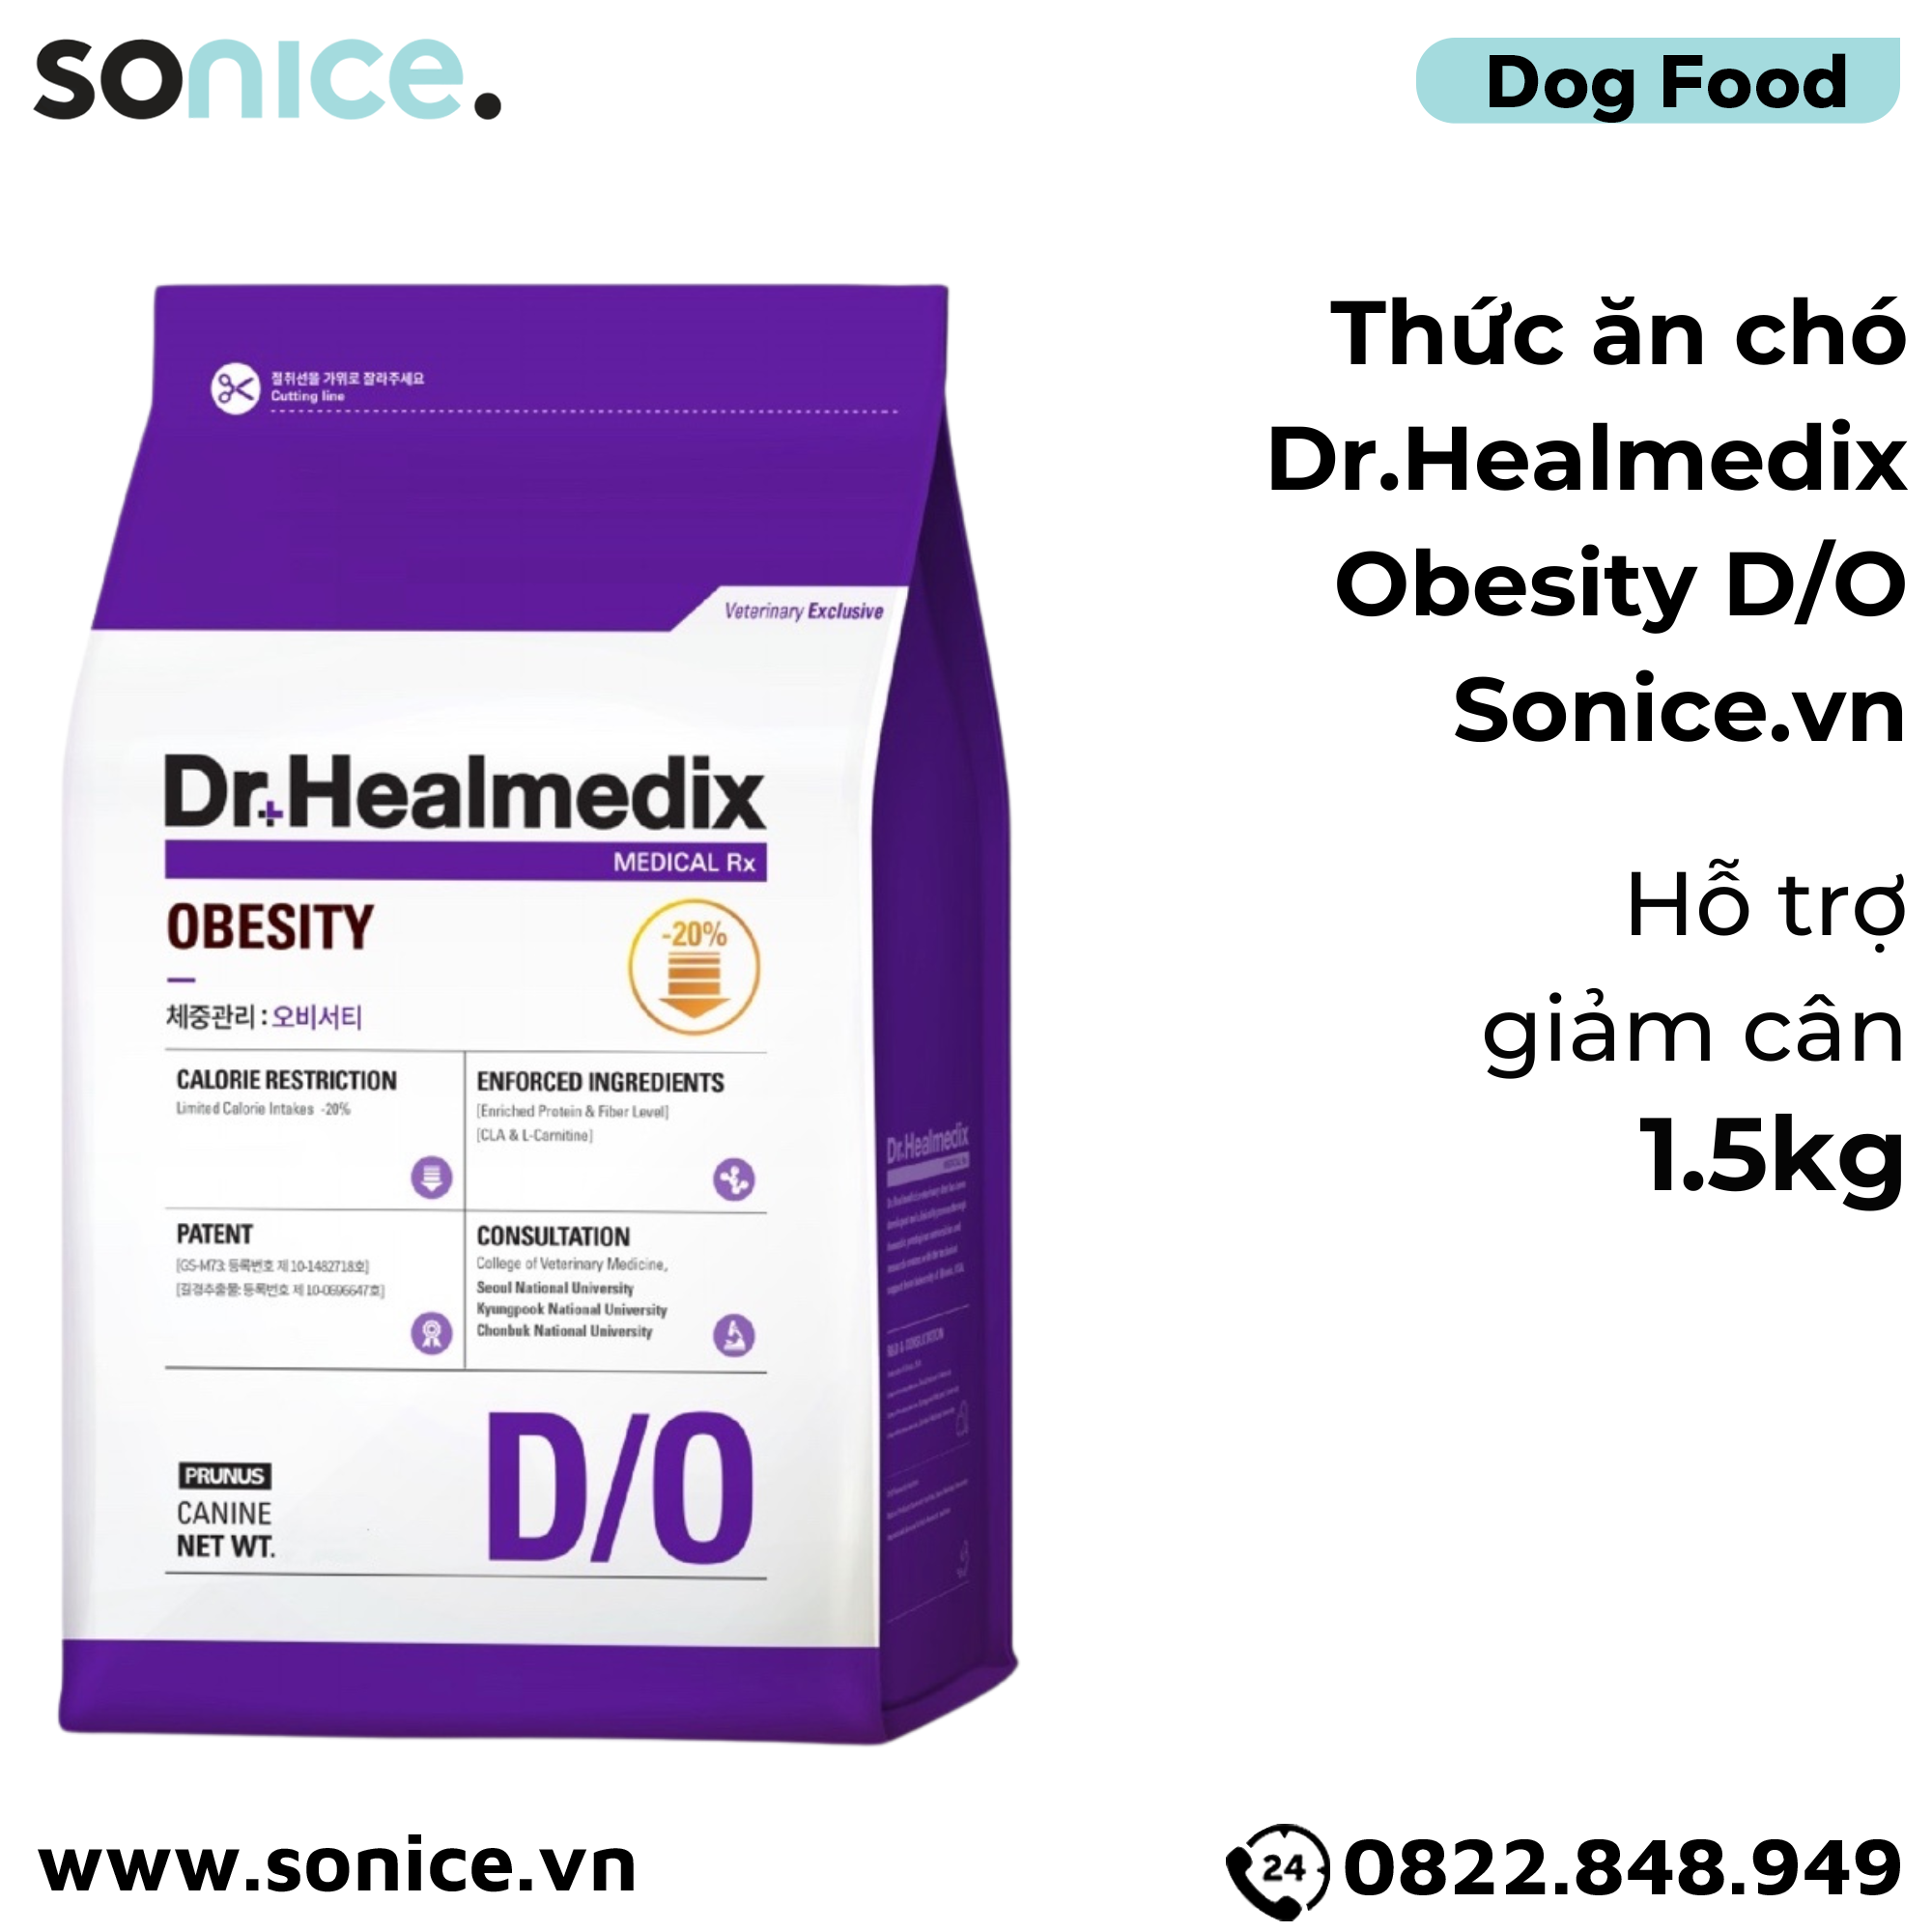  Thức ăn chó Dr.Healmedix Obesity D/O 1.5kg - Hỗ trợ giảm cân SONICE. 